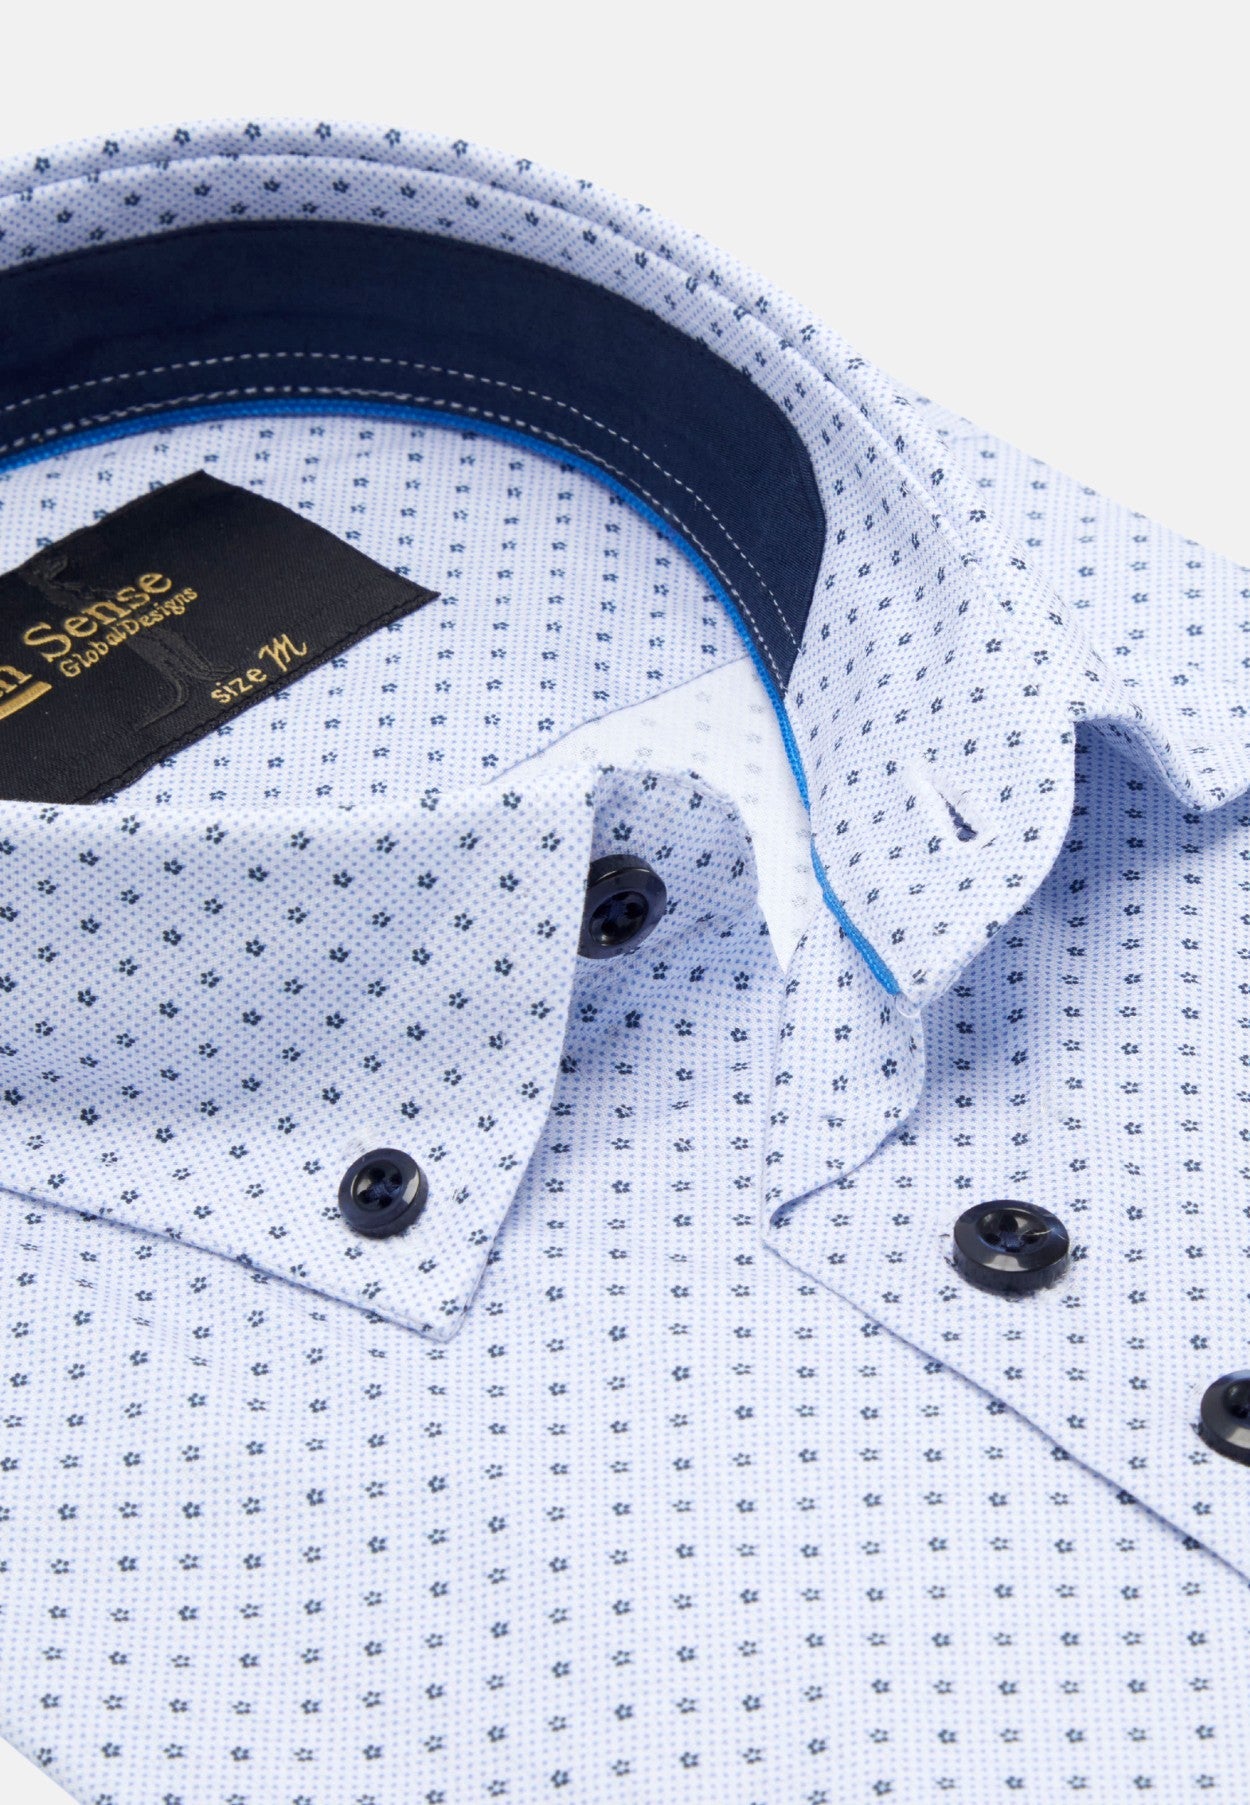 Men's Button Down Blue/Navy Star Print Shirt-Close Up View